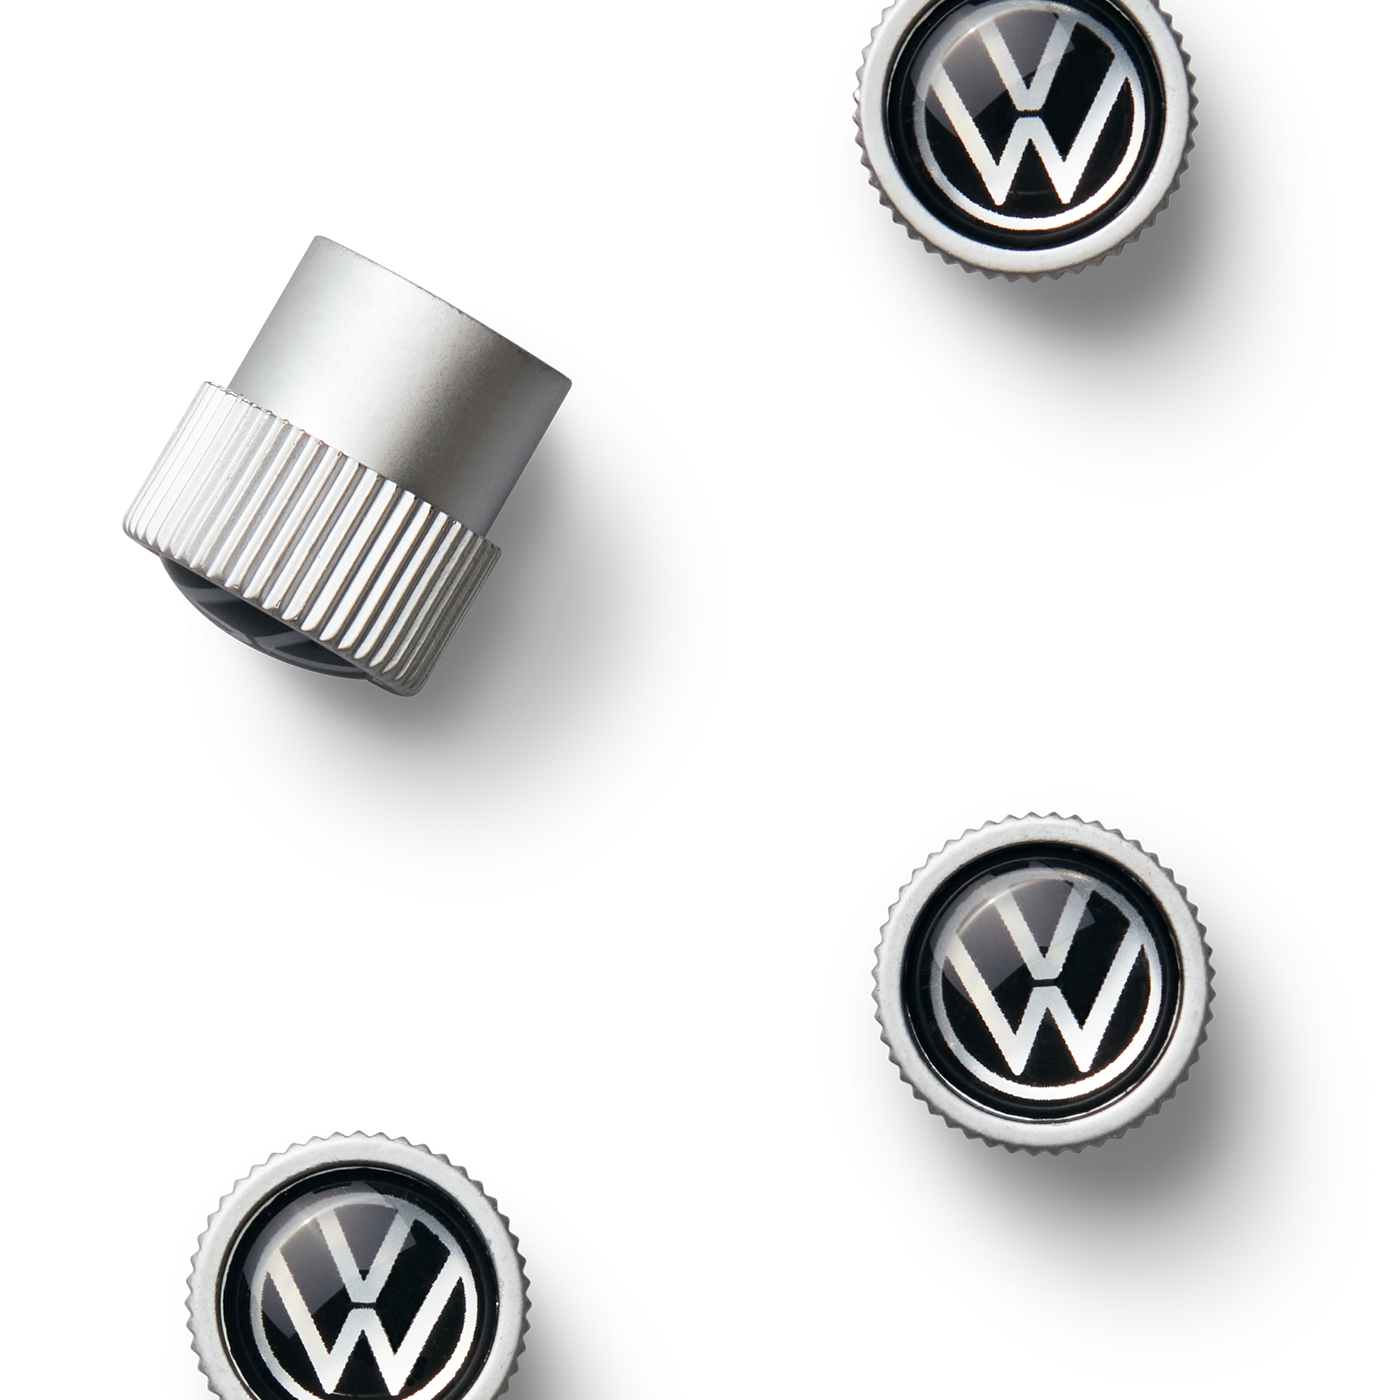 Volkswagen Valve Stem Caps | VW Service and Parts